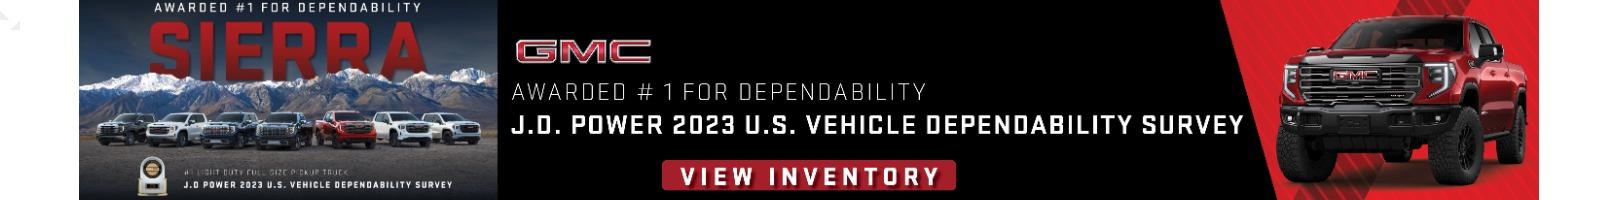 GMC Awarded #1 For Dependability Sierra J.D. Power 2023 U.S. Vehicle Dependability Survey